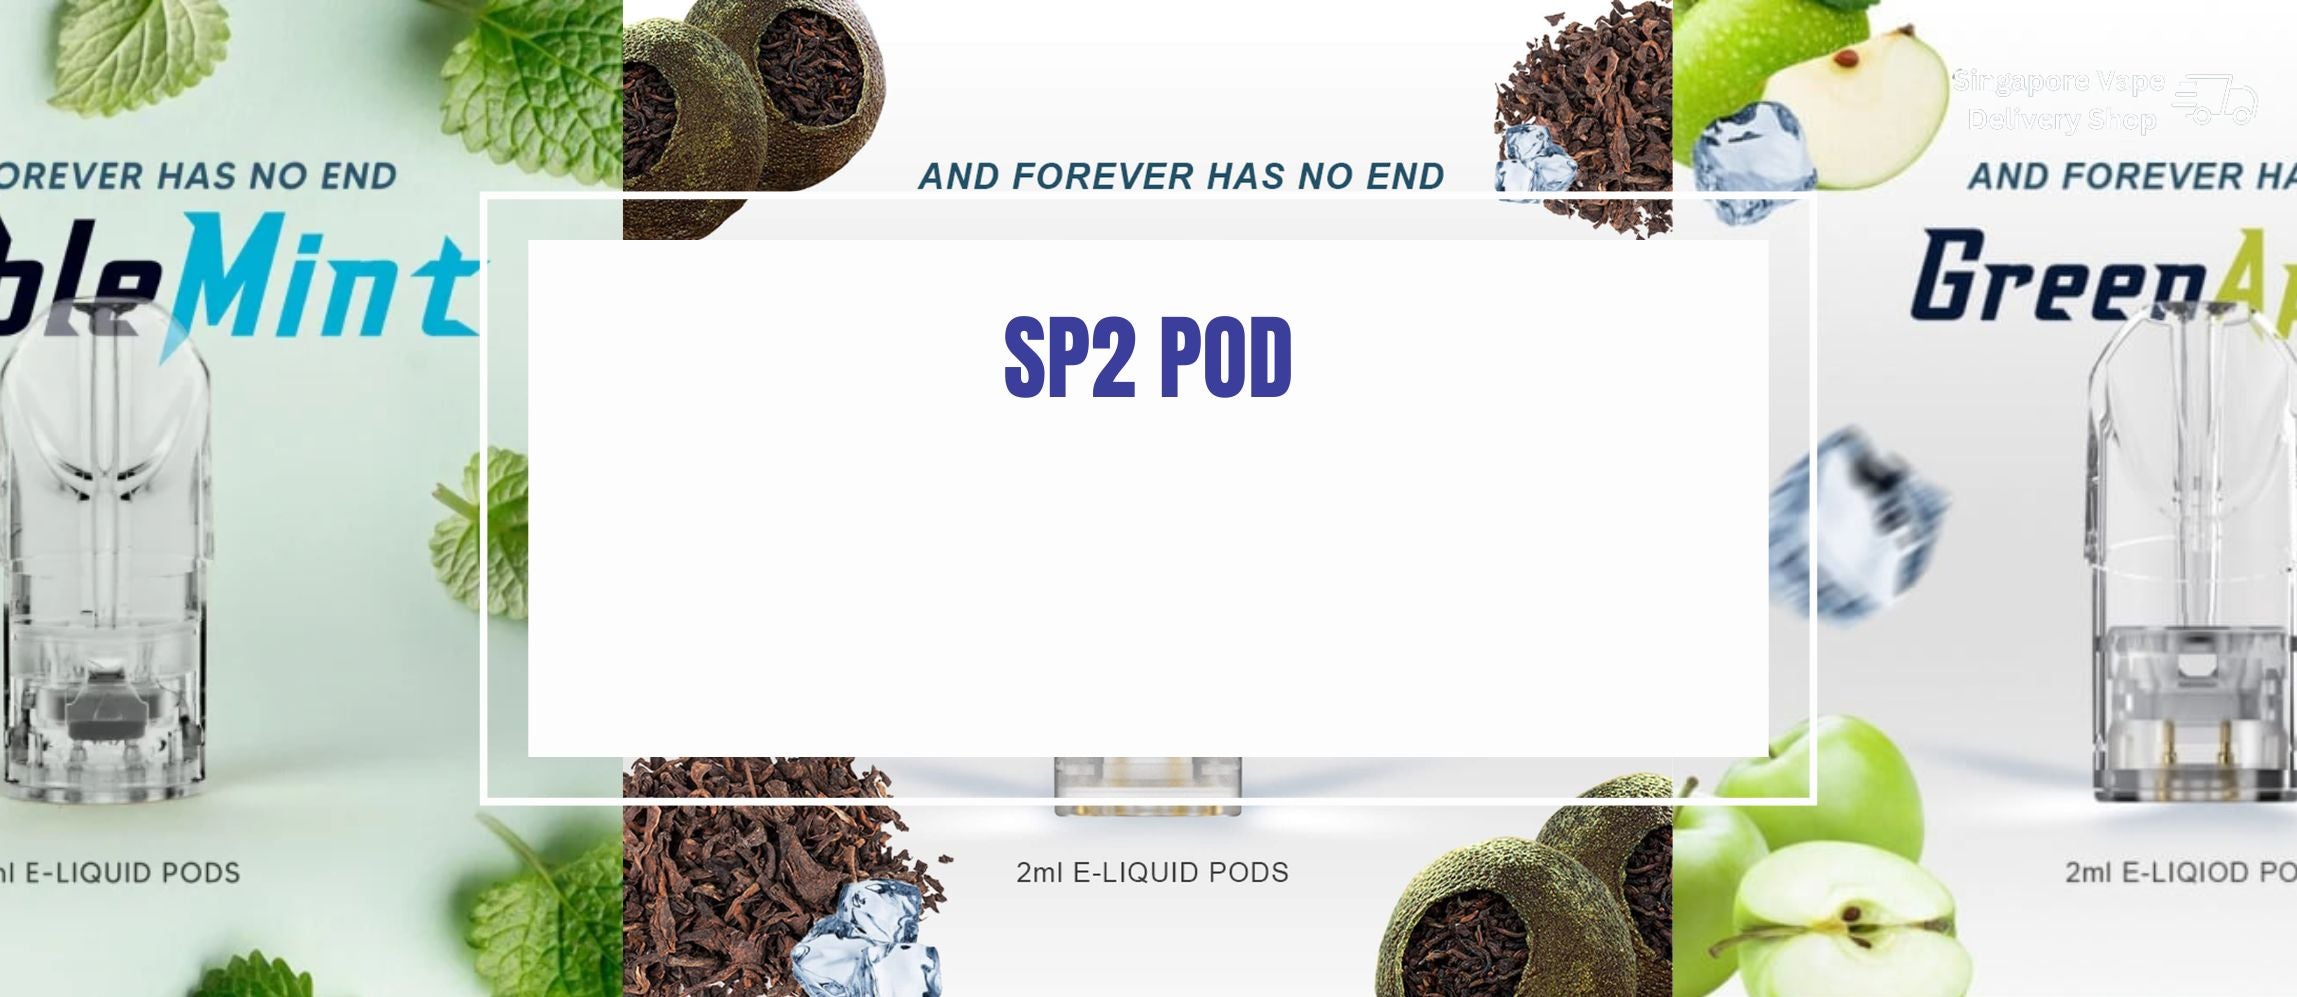 Sp2-pod-banner